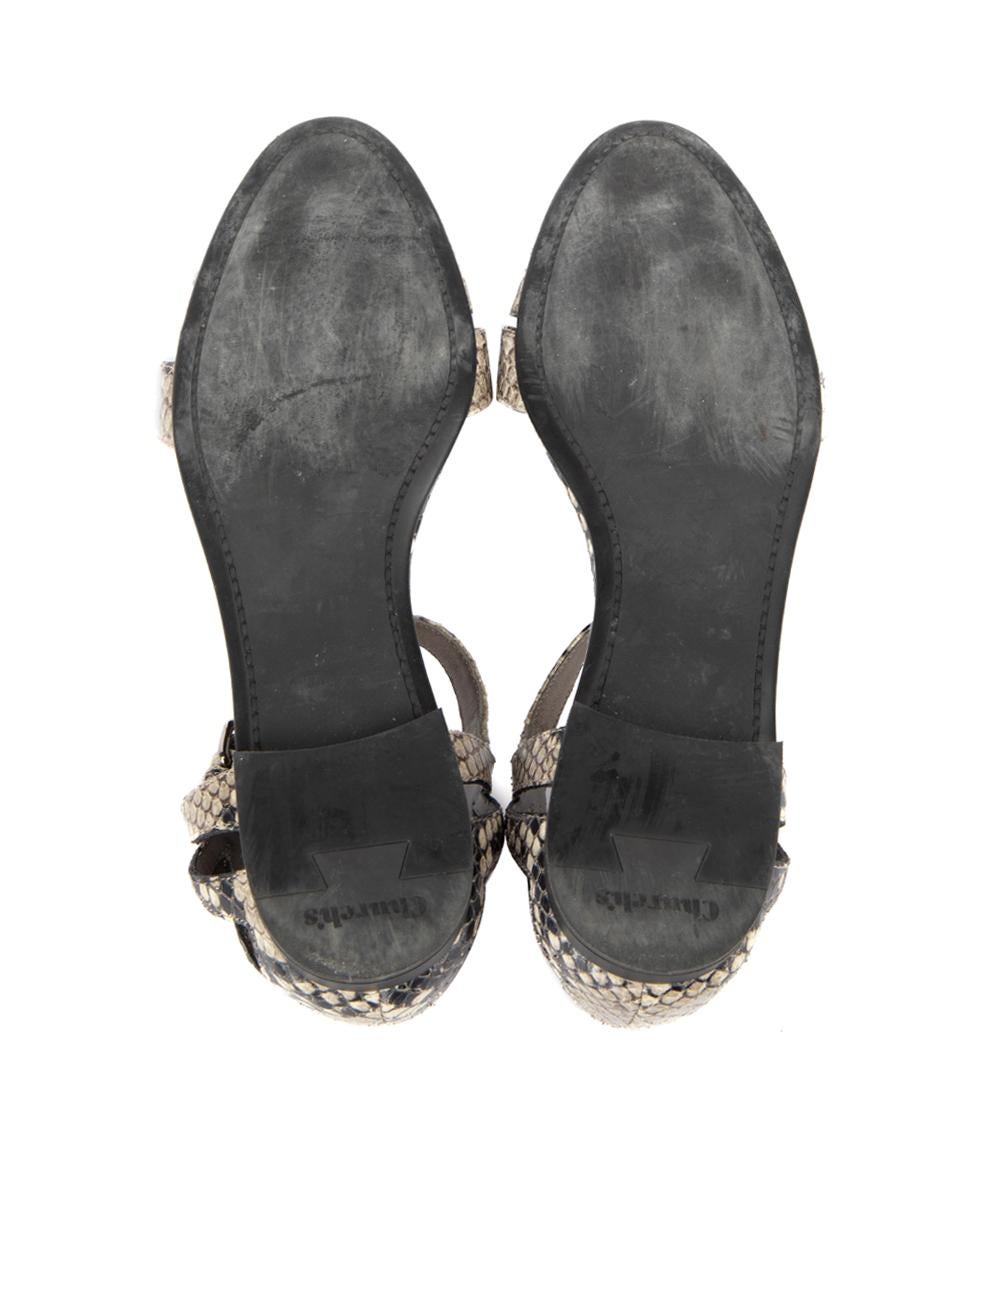 Pre-Loved Church's Women's Grey Snakeskin Flat Sandals 1